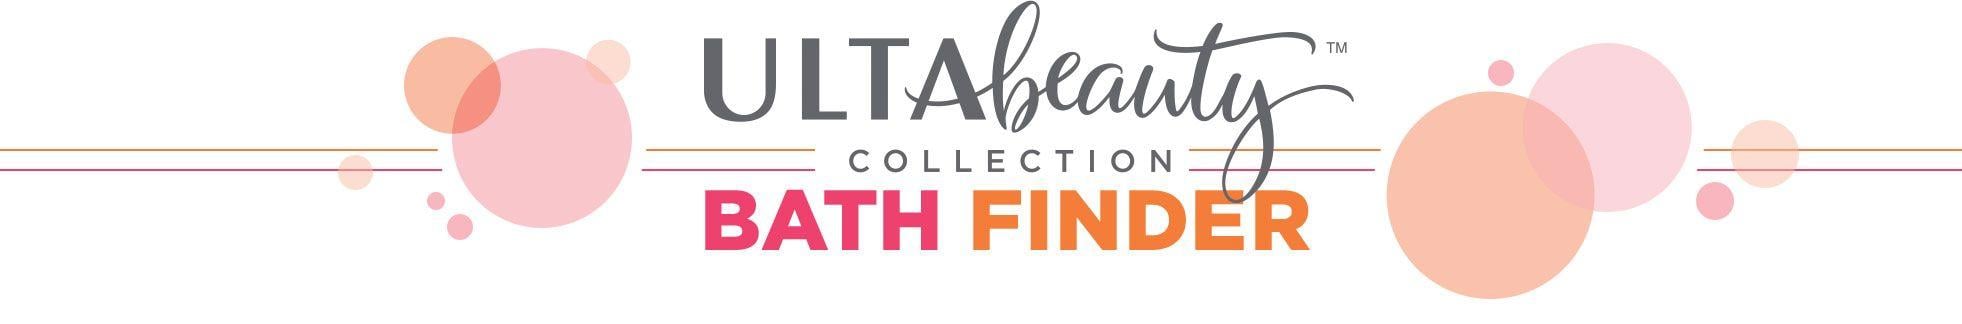 ULTA Beauty Logo - Ulta Bath Collection Finder